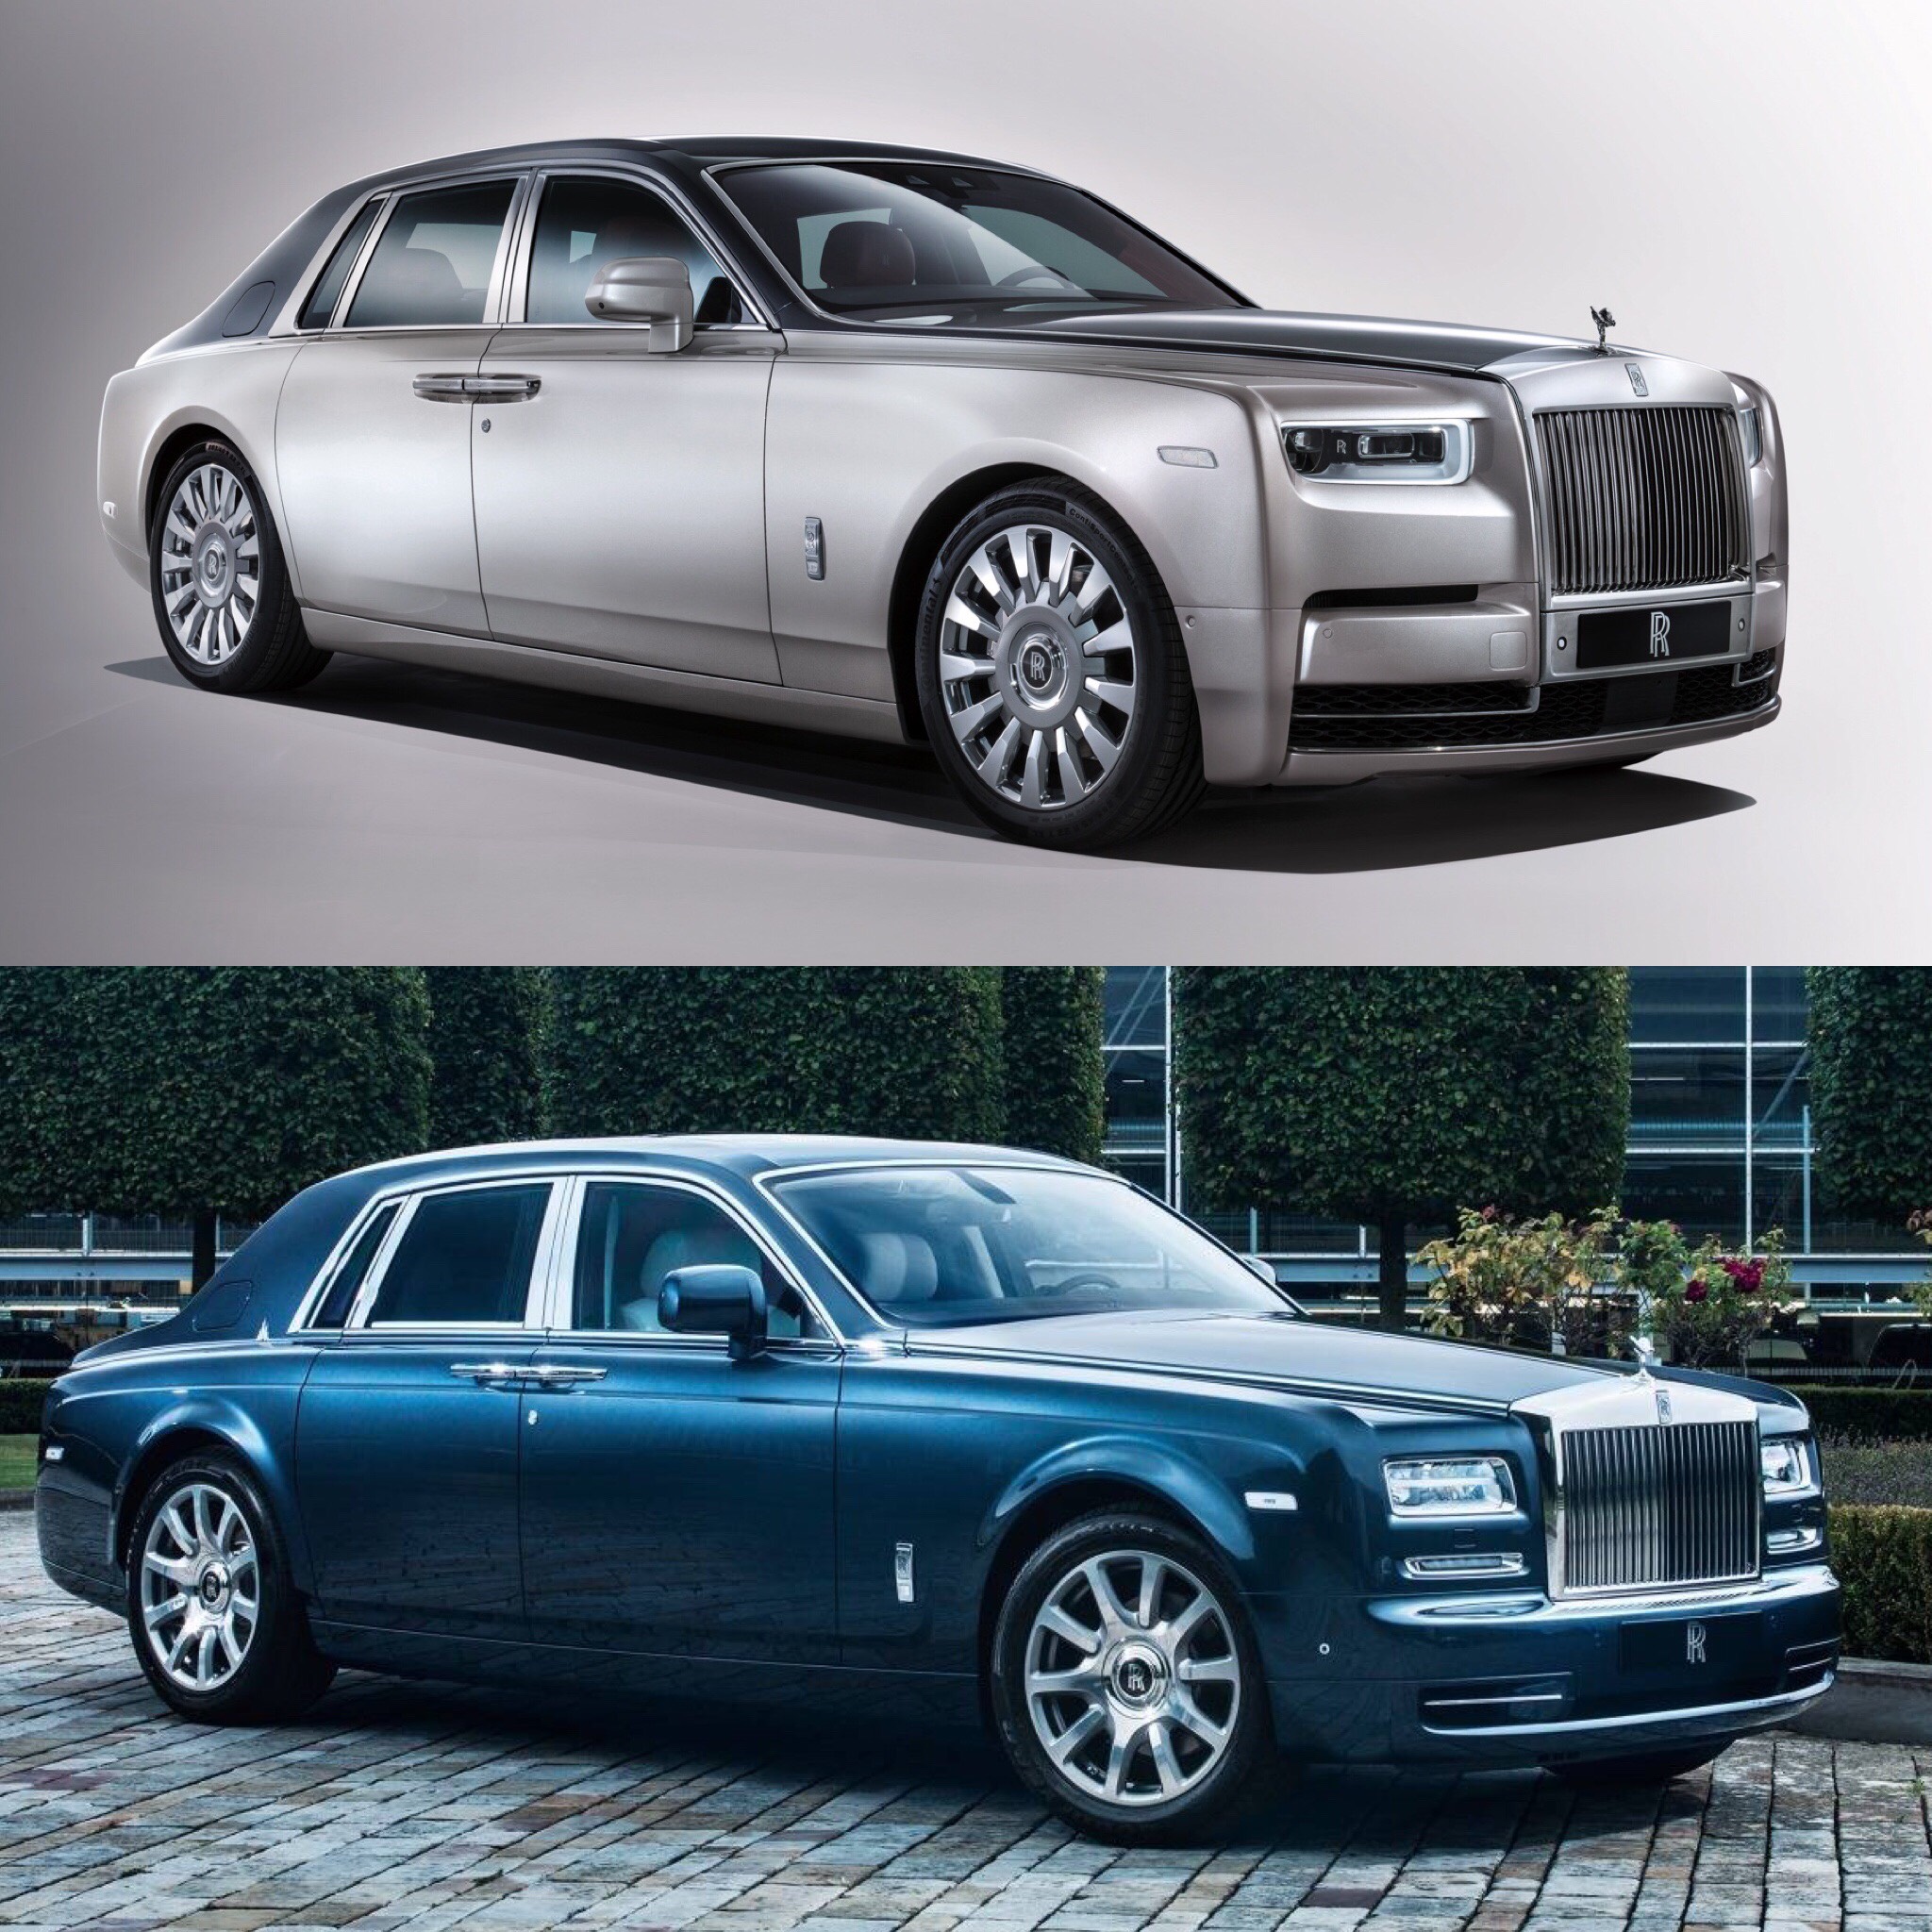 Rolls Royce Phantom VIII vs Rolls Royce Phantom VII